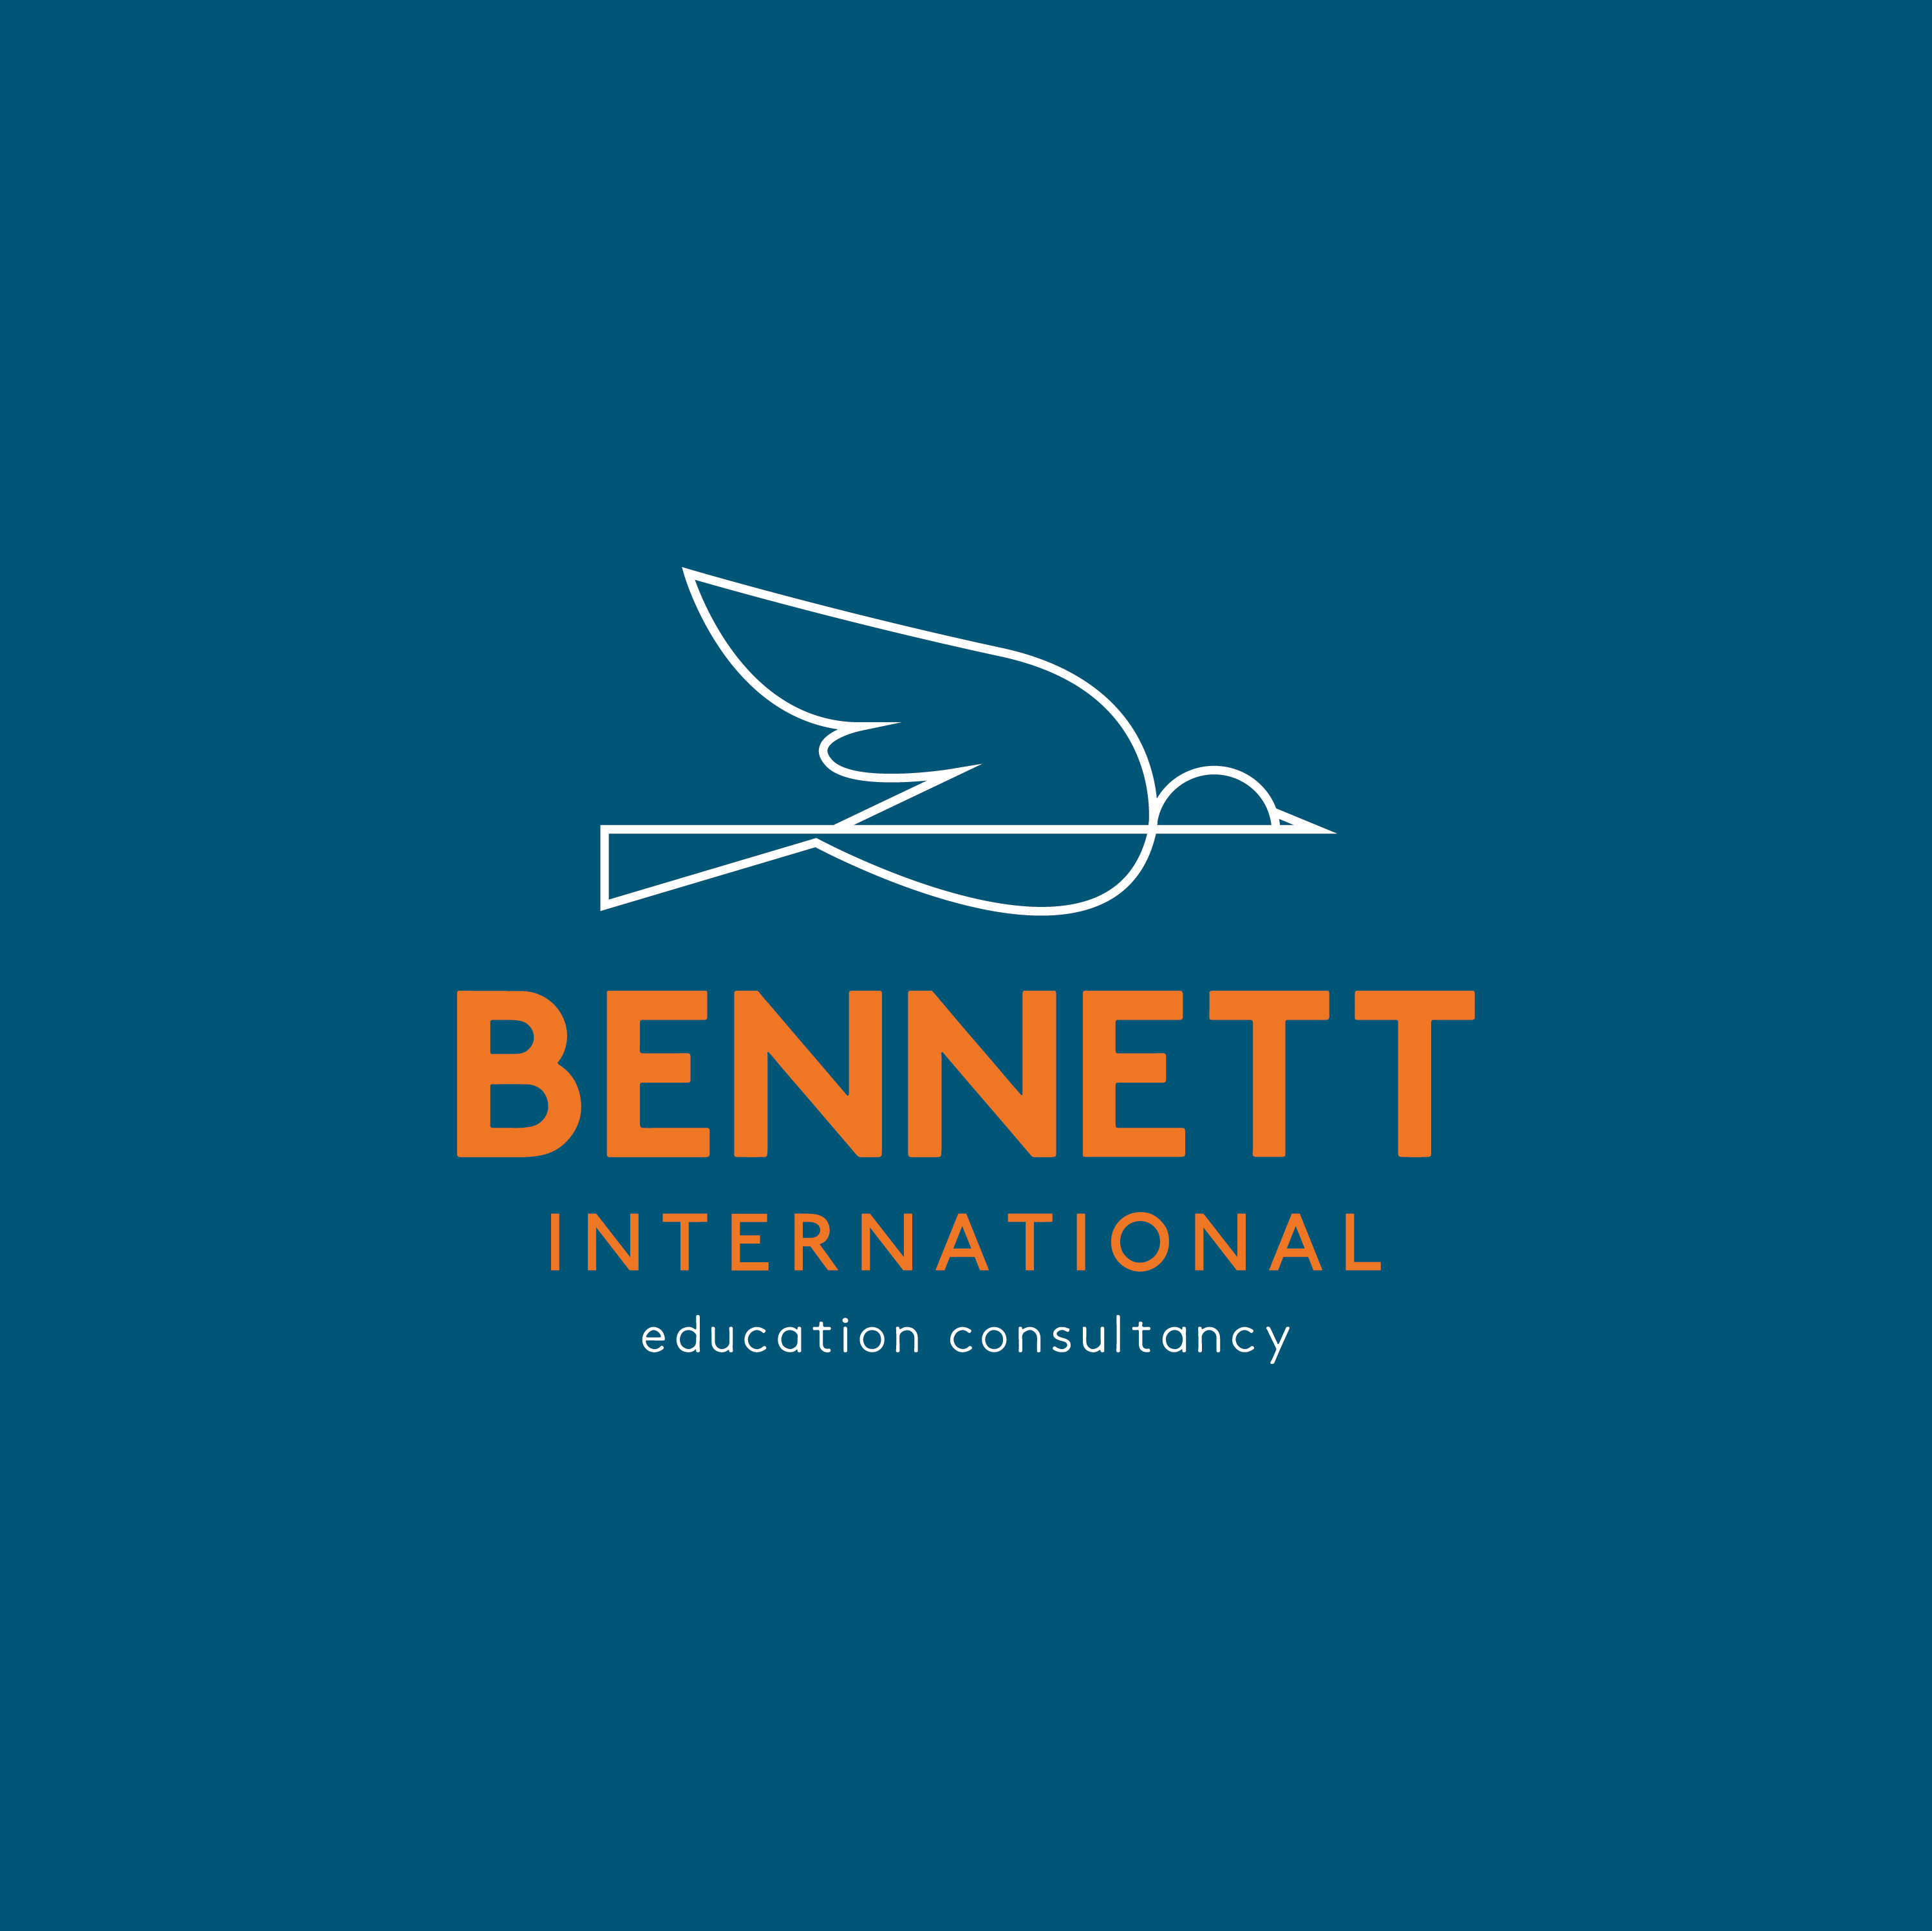 Bennett International Education Consultancy